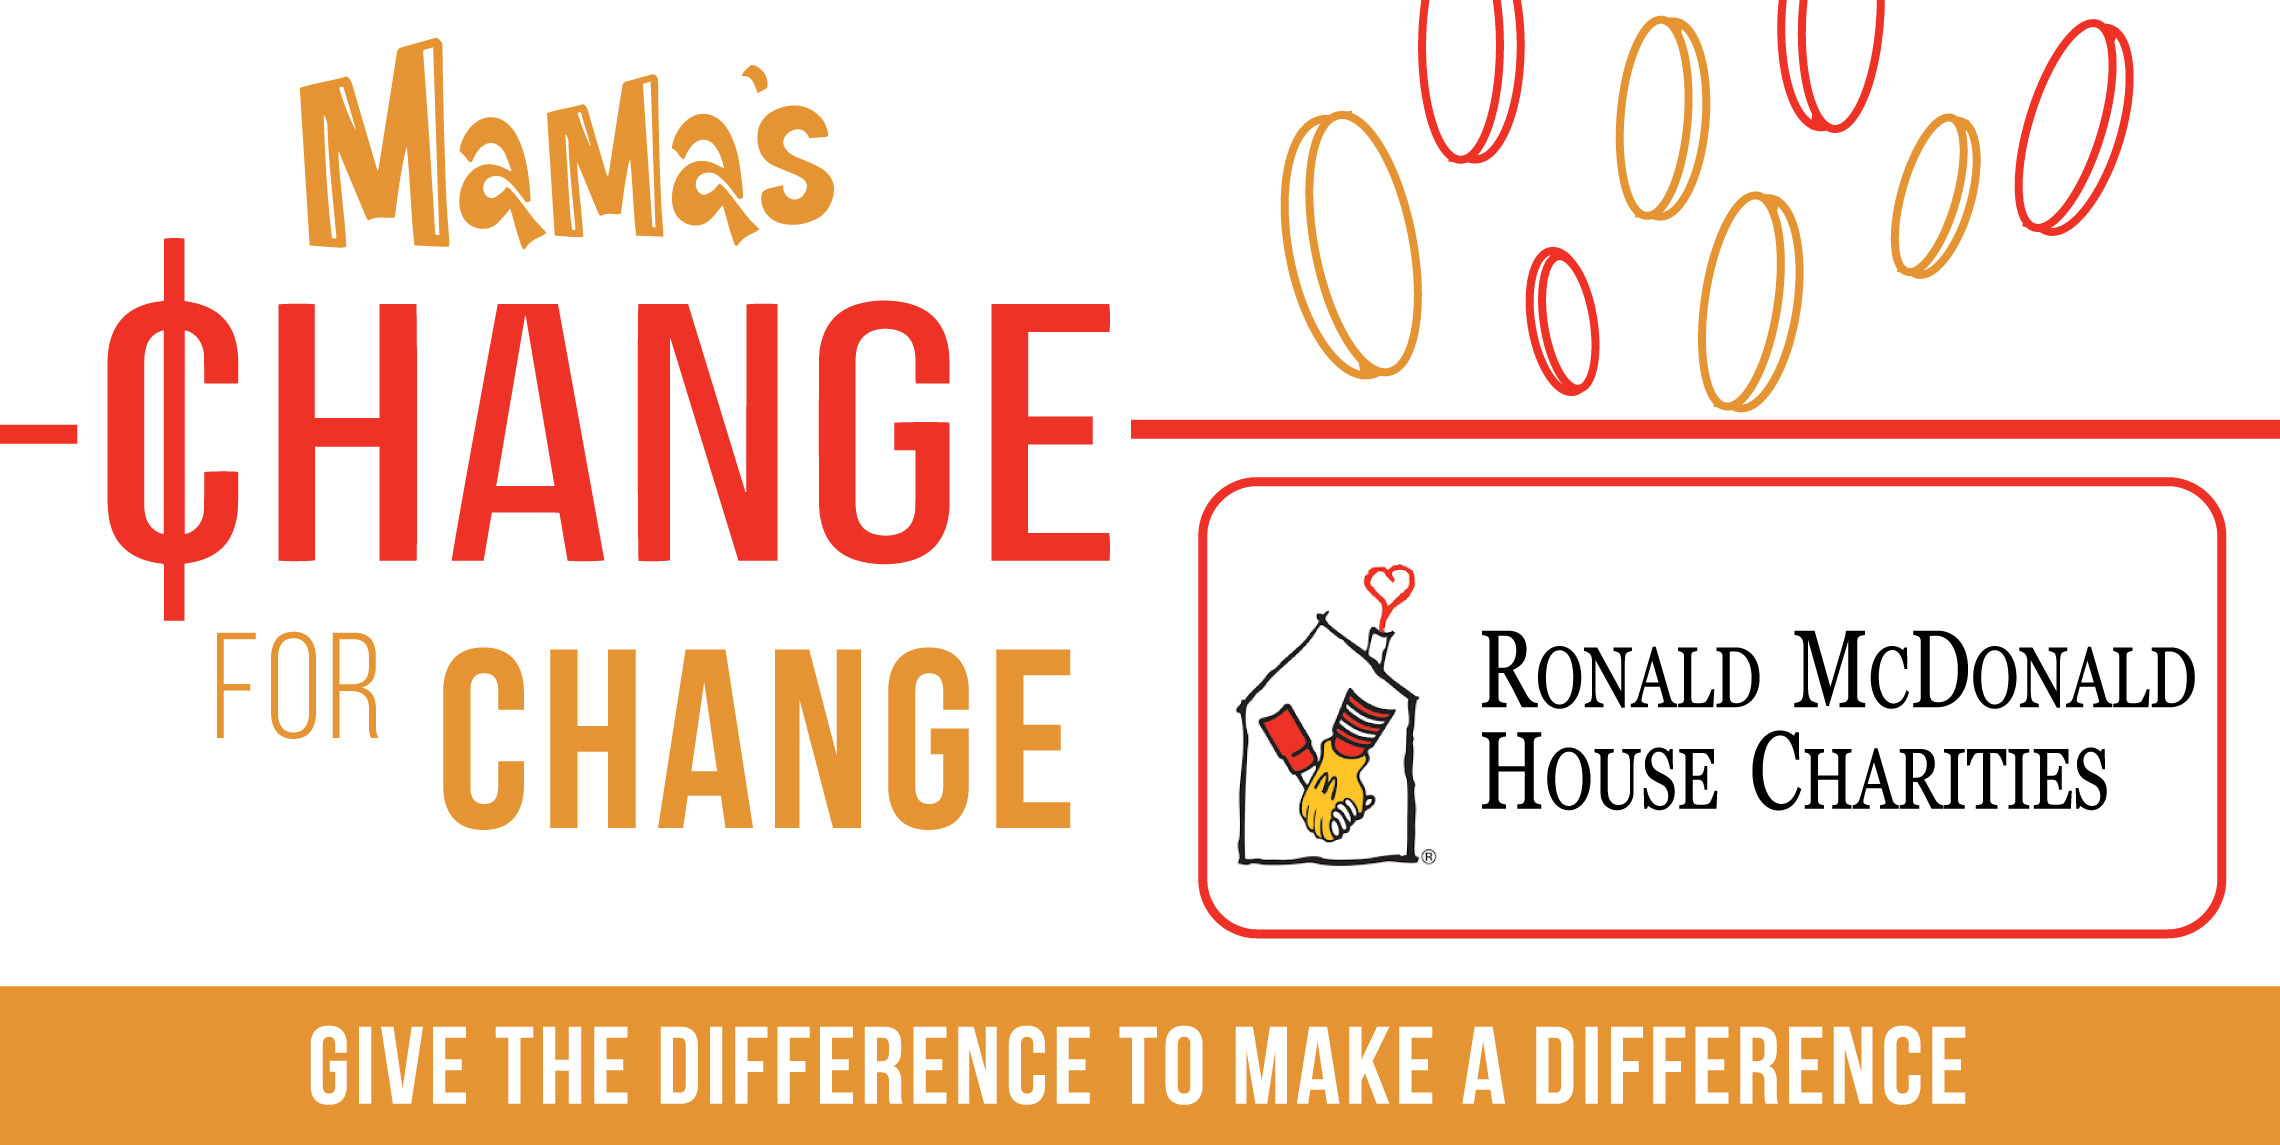 CHANGE FOR CHANGE RONALD MCDONALD HOUSE